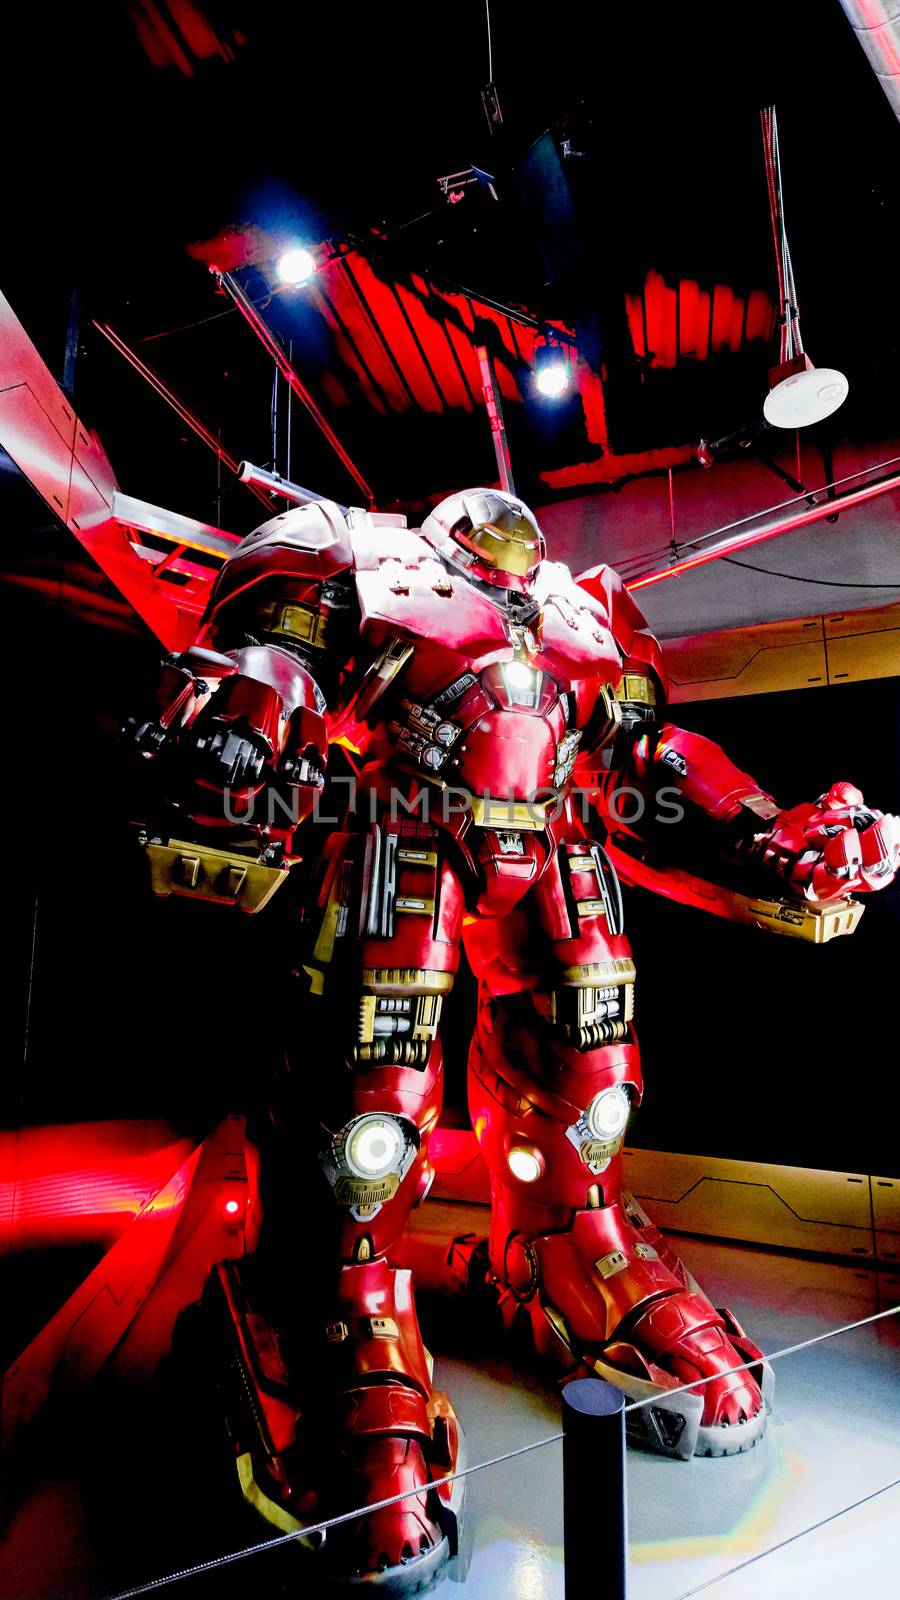 LAS VEGAS, NV, USA - Oct 09, 2017: Hulk Buster Iron Man costume at the Tony Stark base at the Avengers experience in Treasure Island Hotel and Casino on Las Vegas Strip.